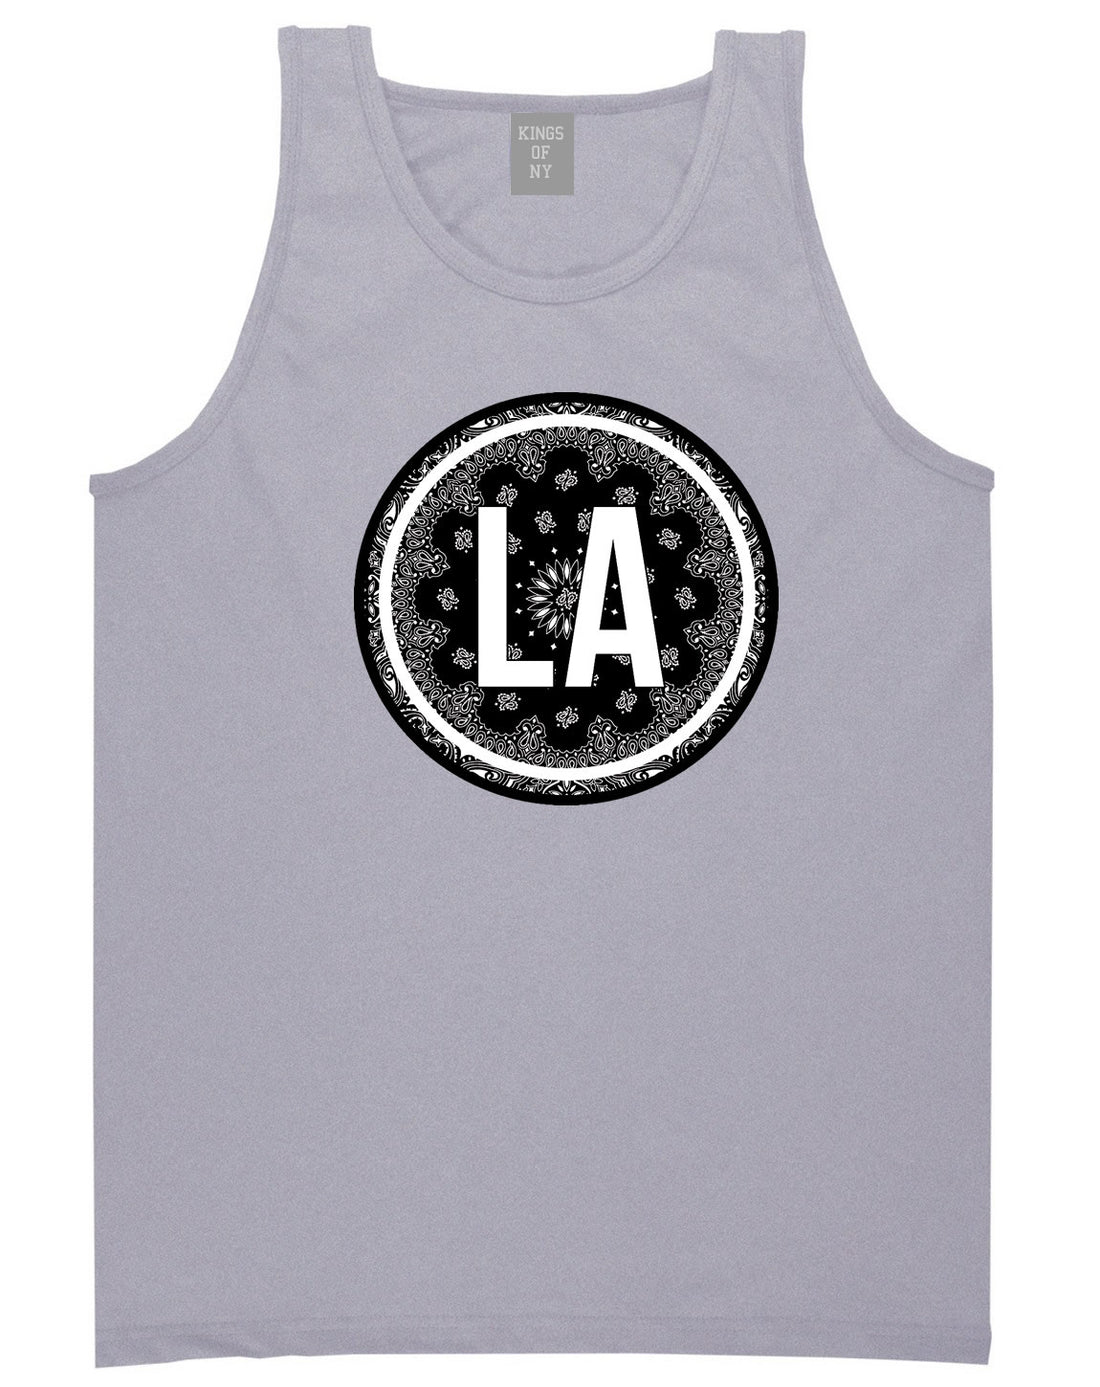 Kings Of NY La Los Angeles Cali California Bandana Tank Top in Grey